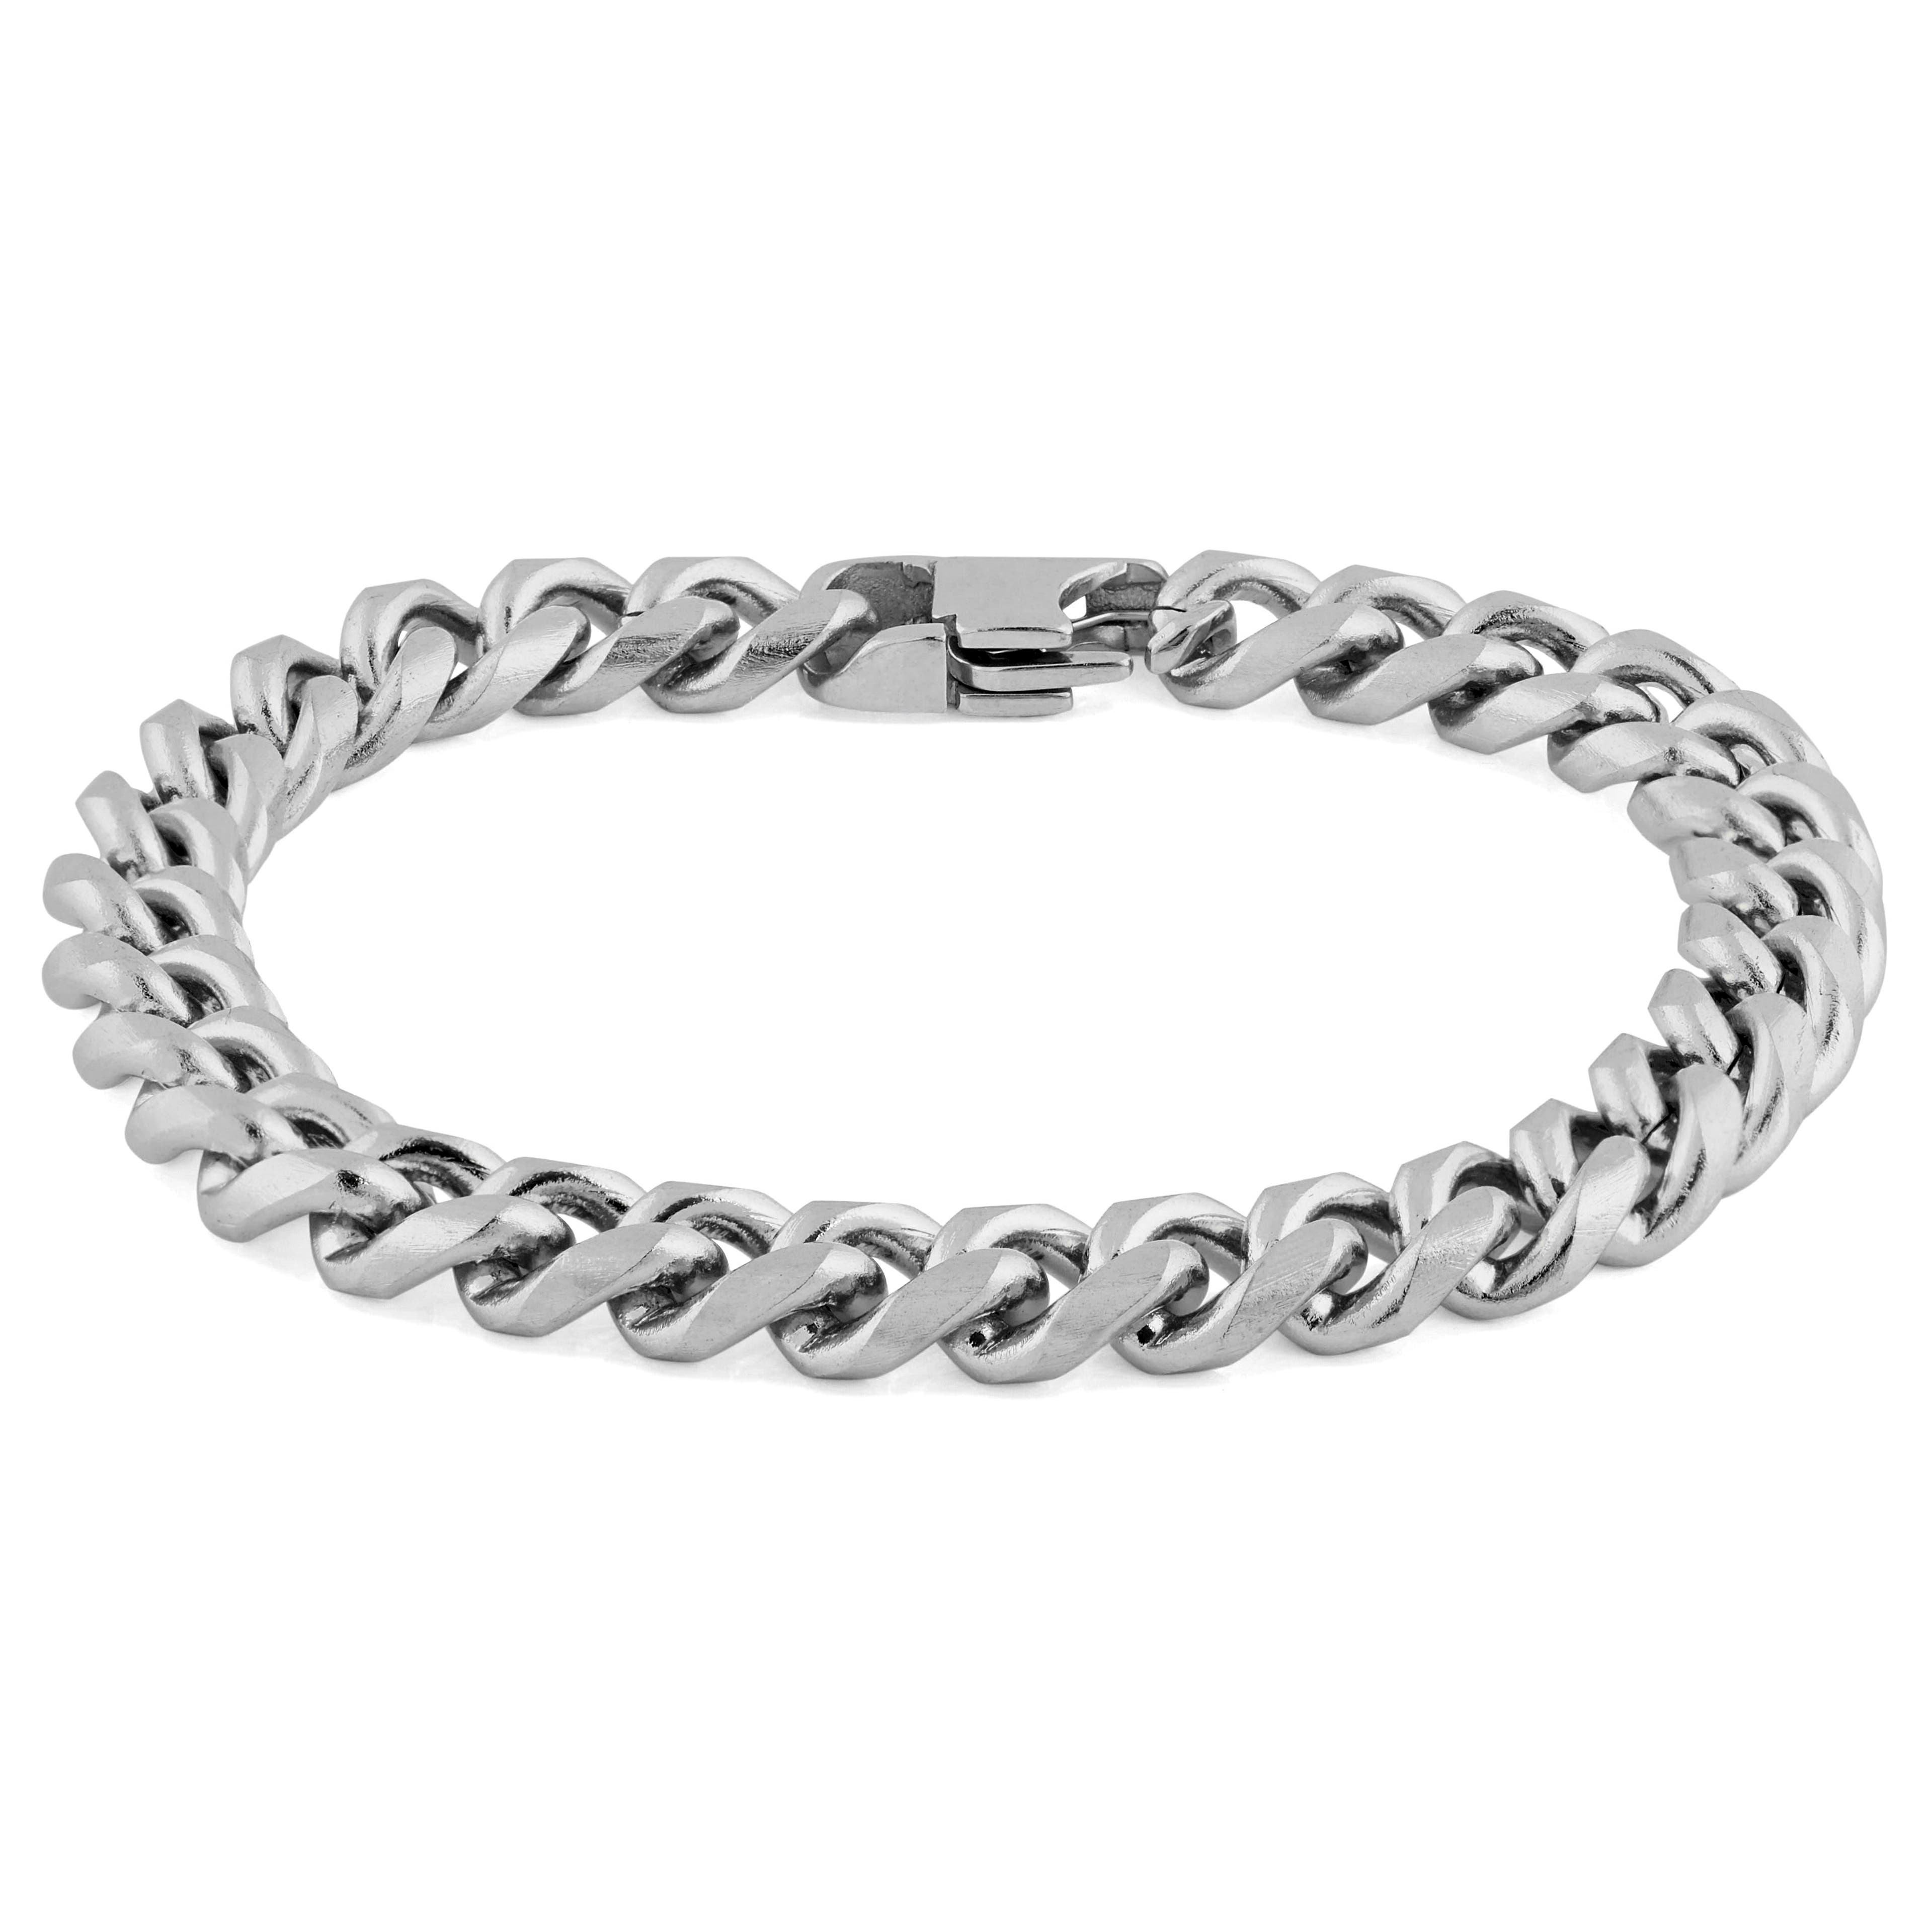 8 mm Silver-Tone Chain Bracelet